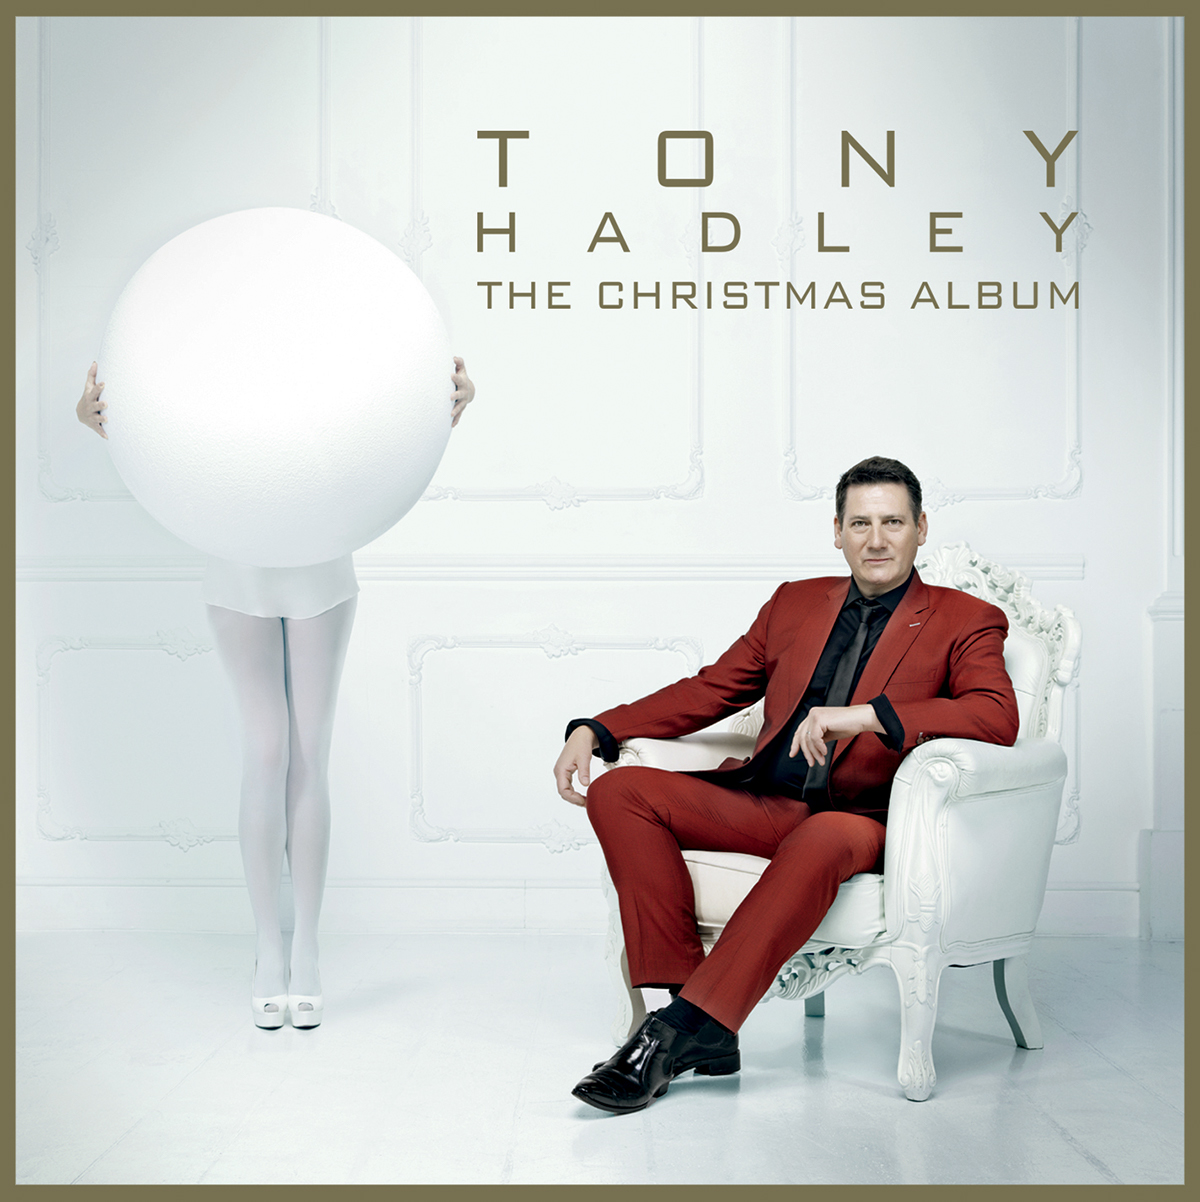 artwork Tony Hadley Album photo universal music photographer backstage Christmas song Singer milano London UMG The Christmas Album Style